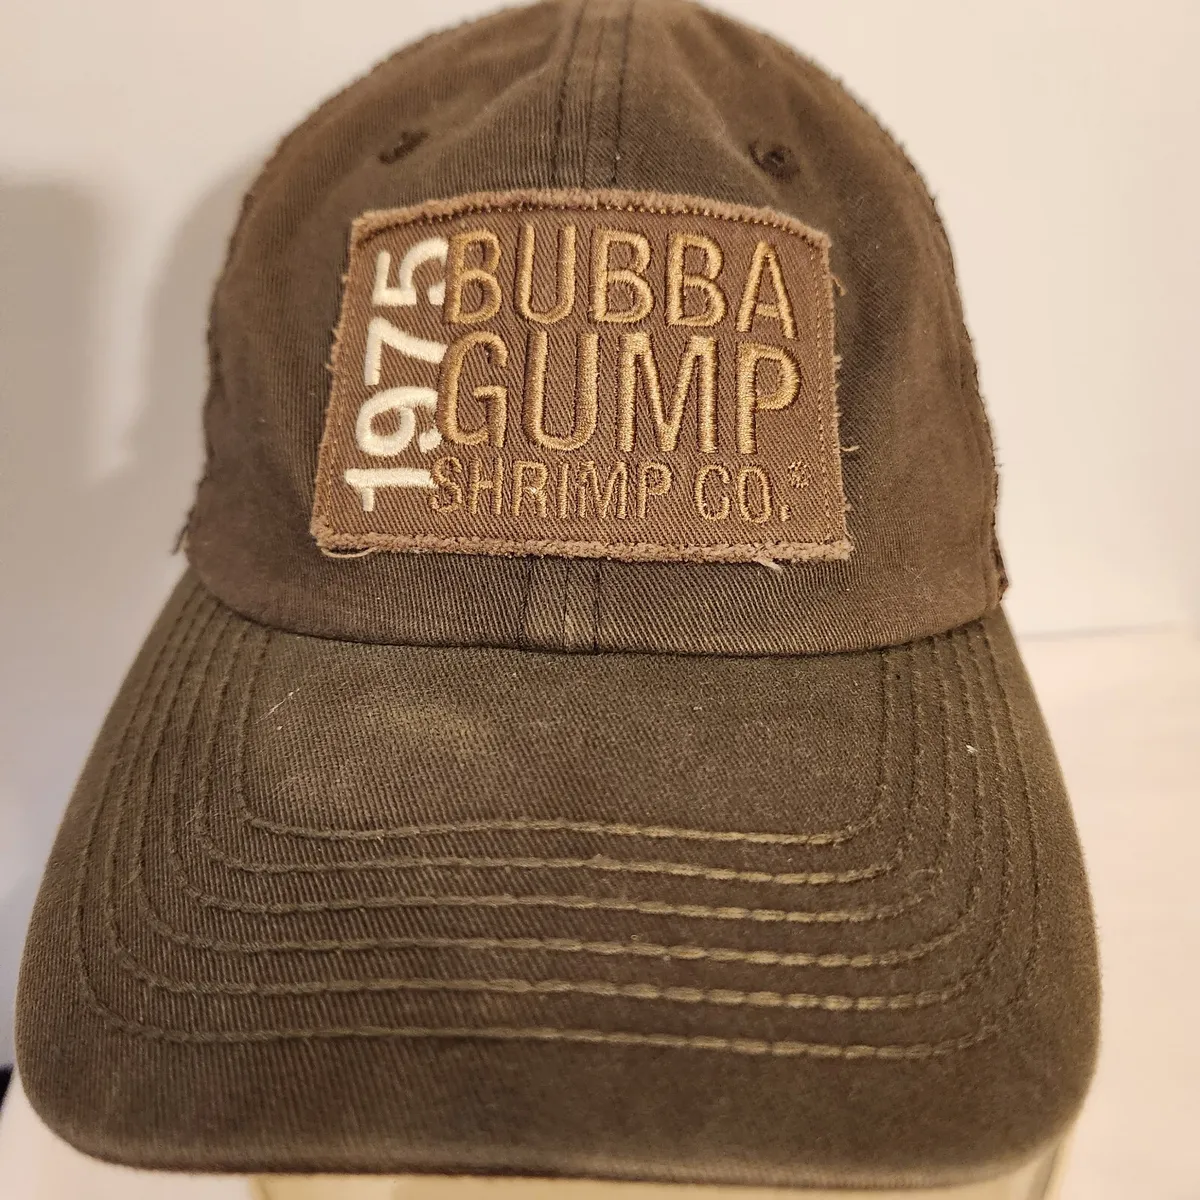 Chapeau Bubba Gump Shrimp Co. casquette baseball snap back rouge snapback  forres